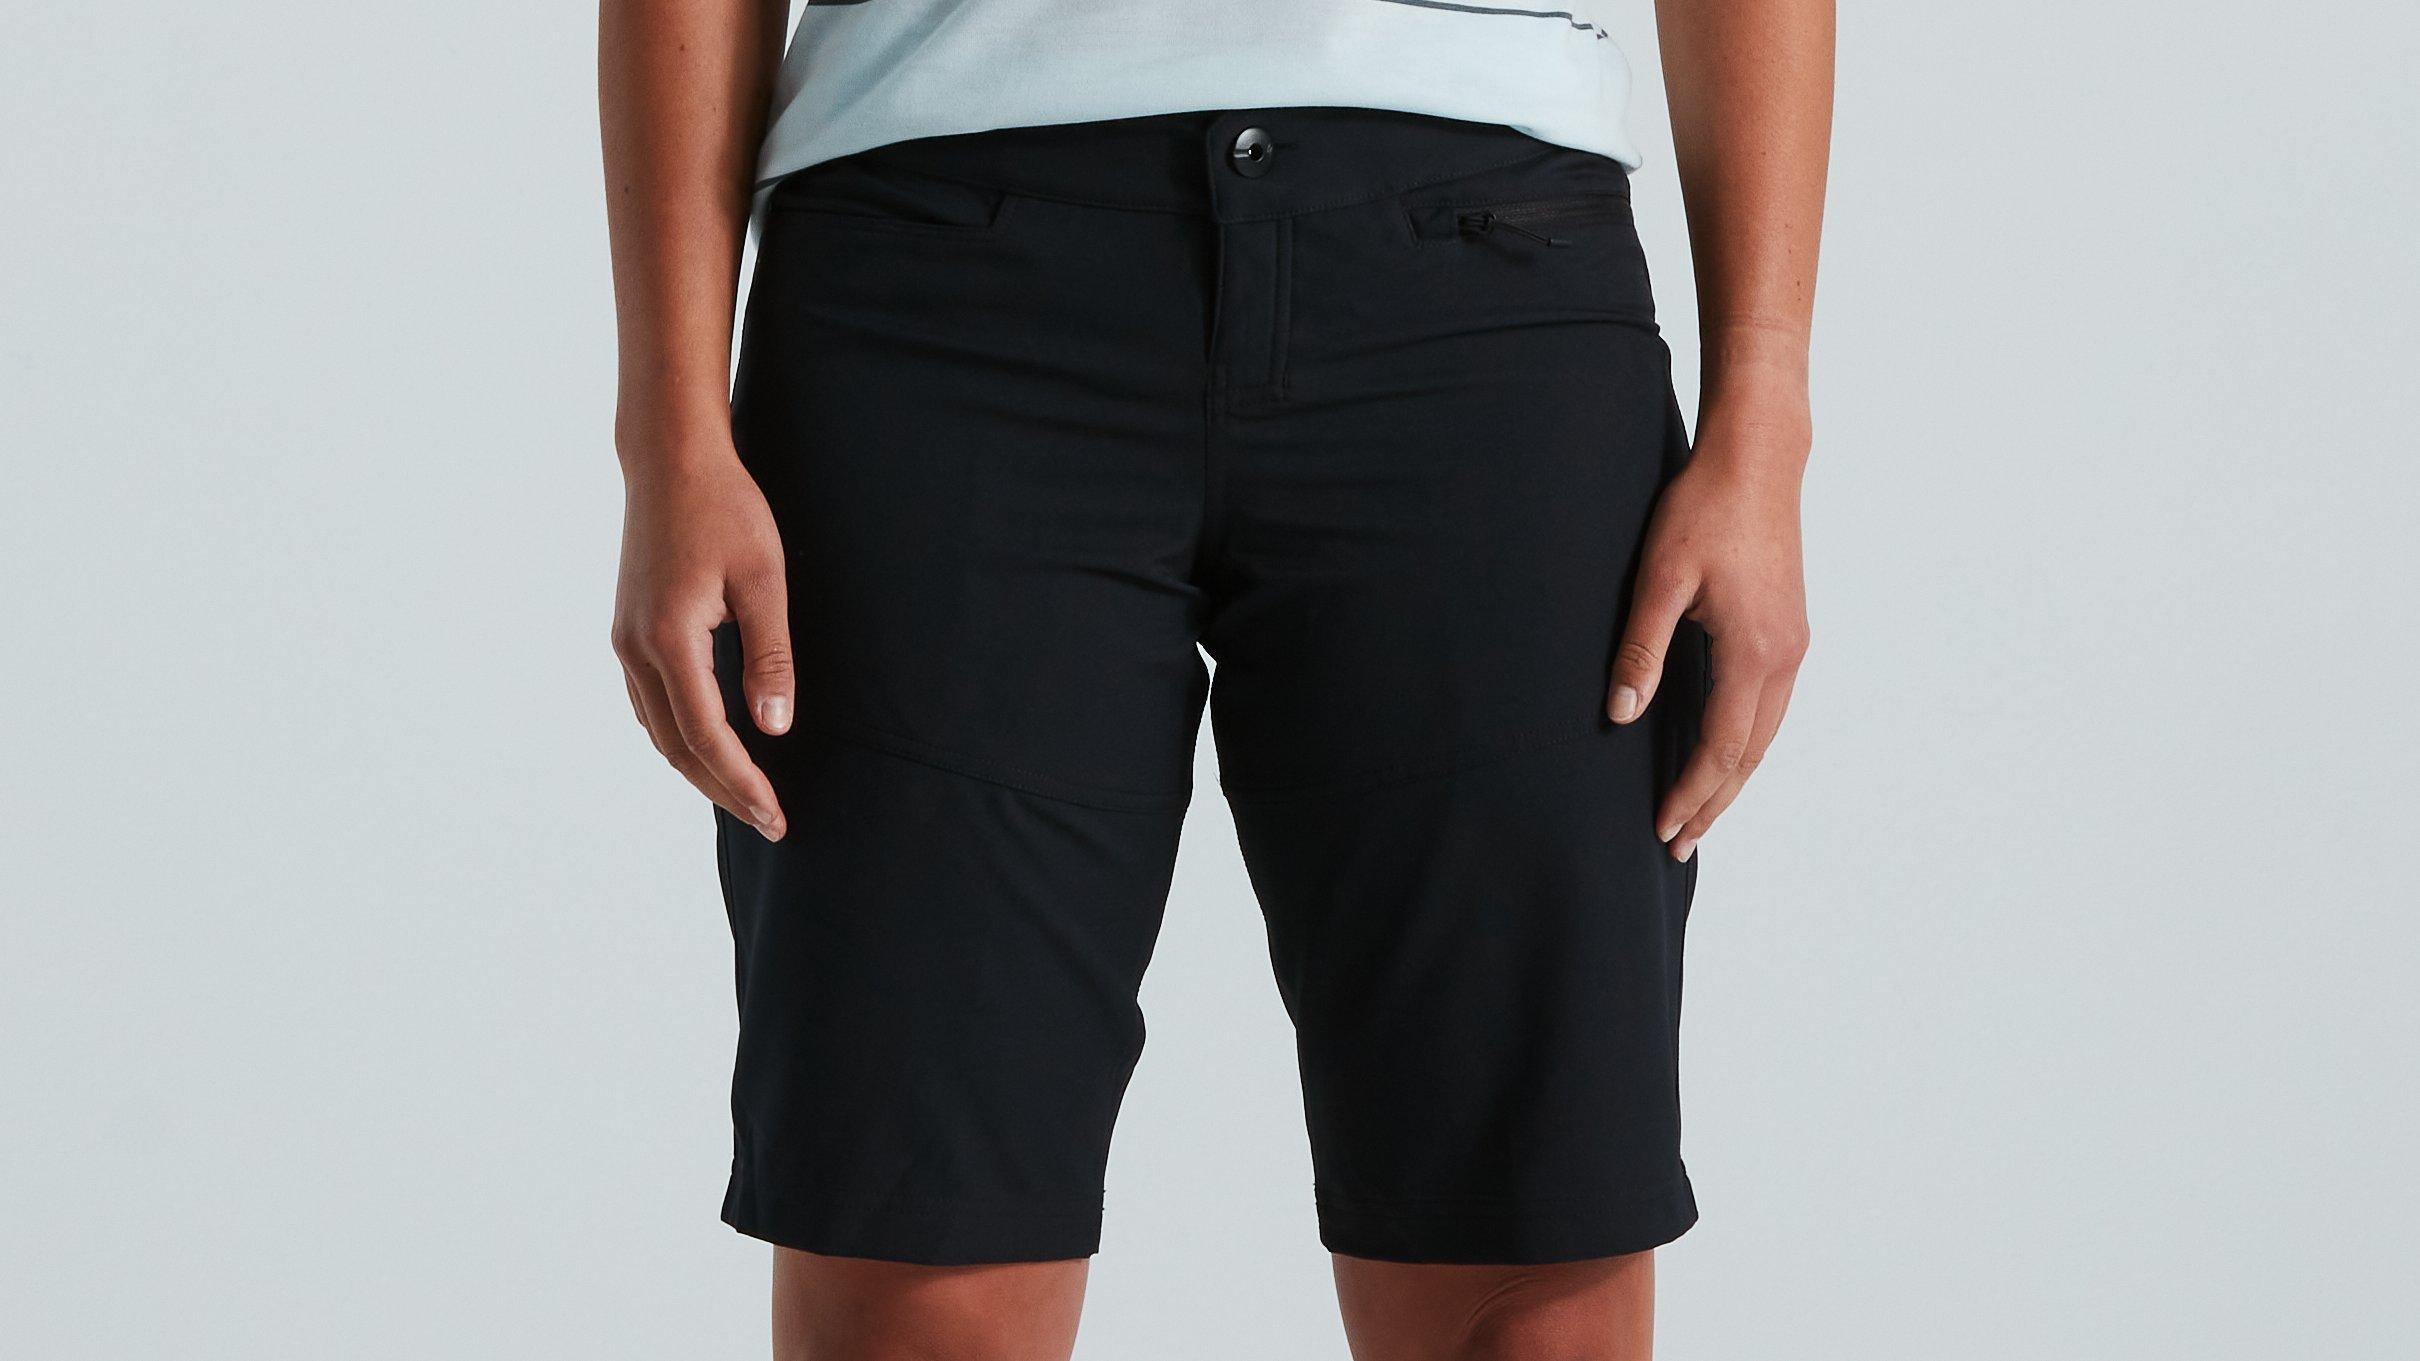 Women's Biker Shorts W/ Pockets - 10 Carbon Gray